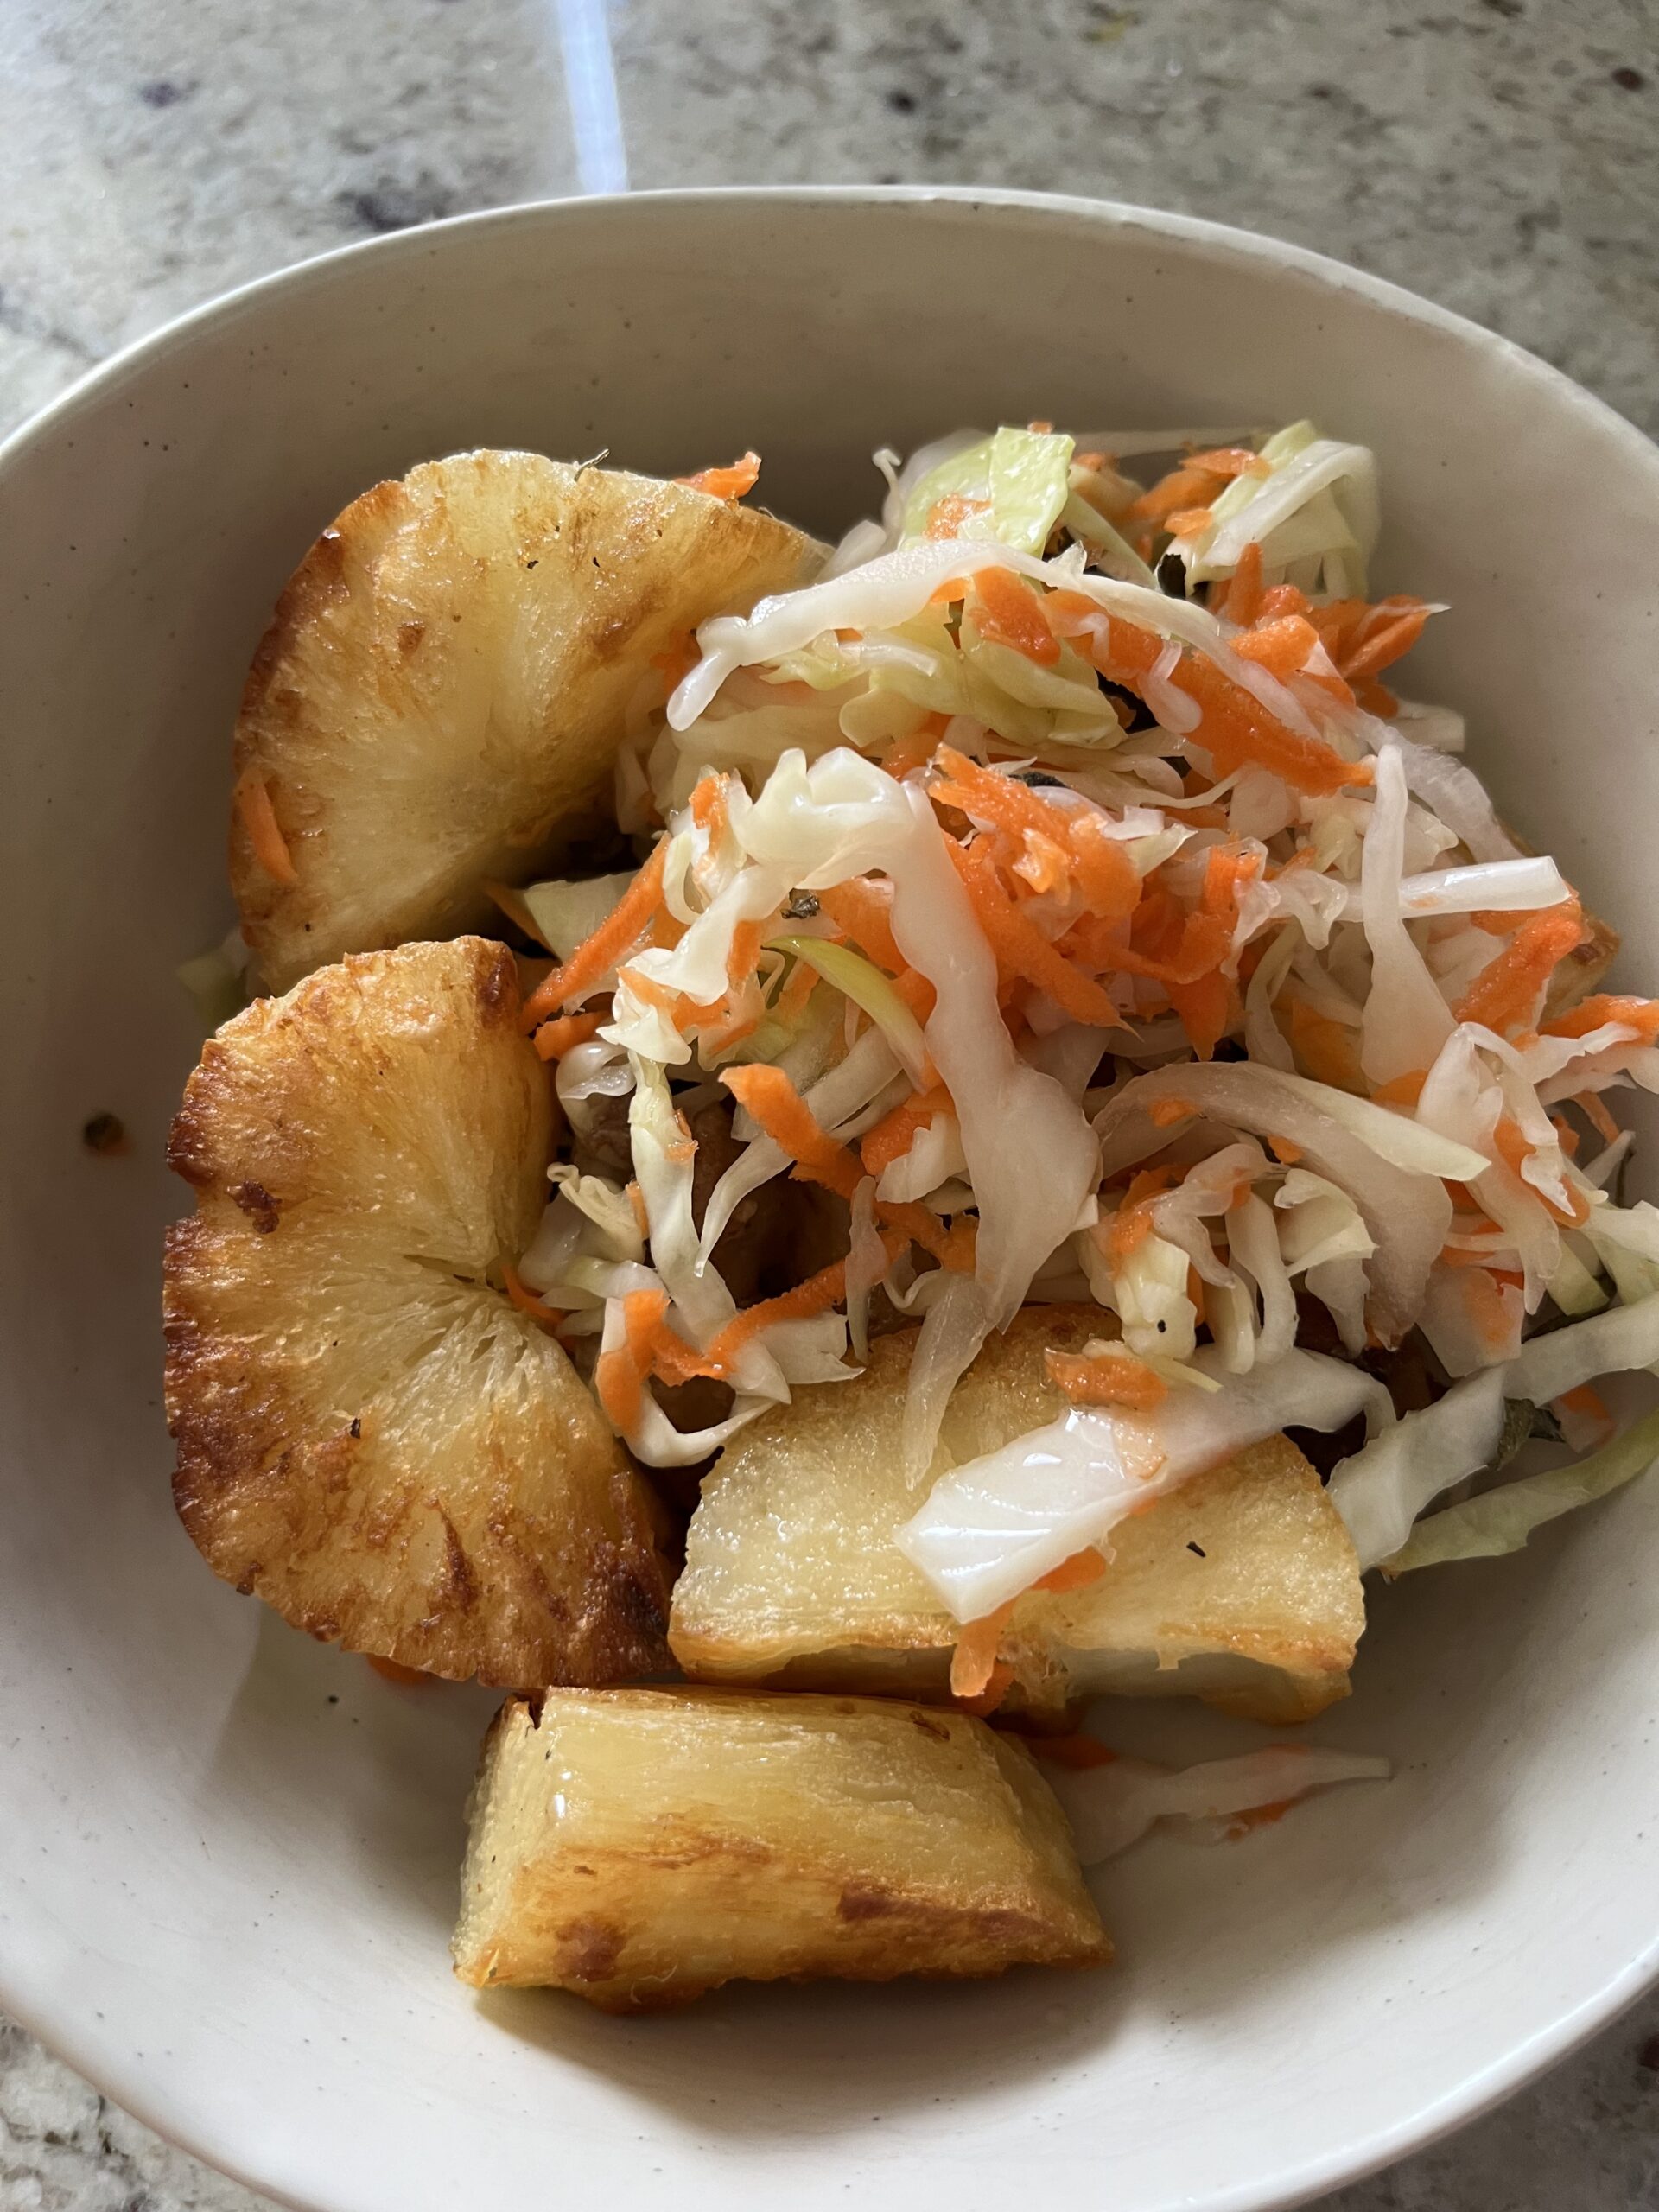 Fried cassava in the instant pot (Yuca Frita)